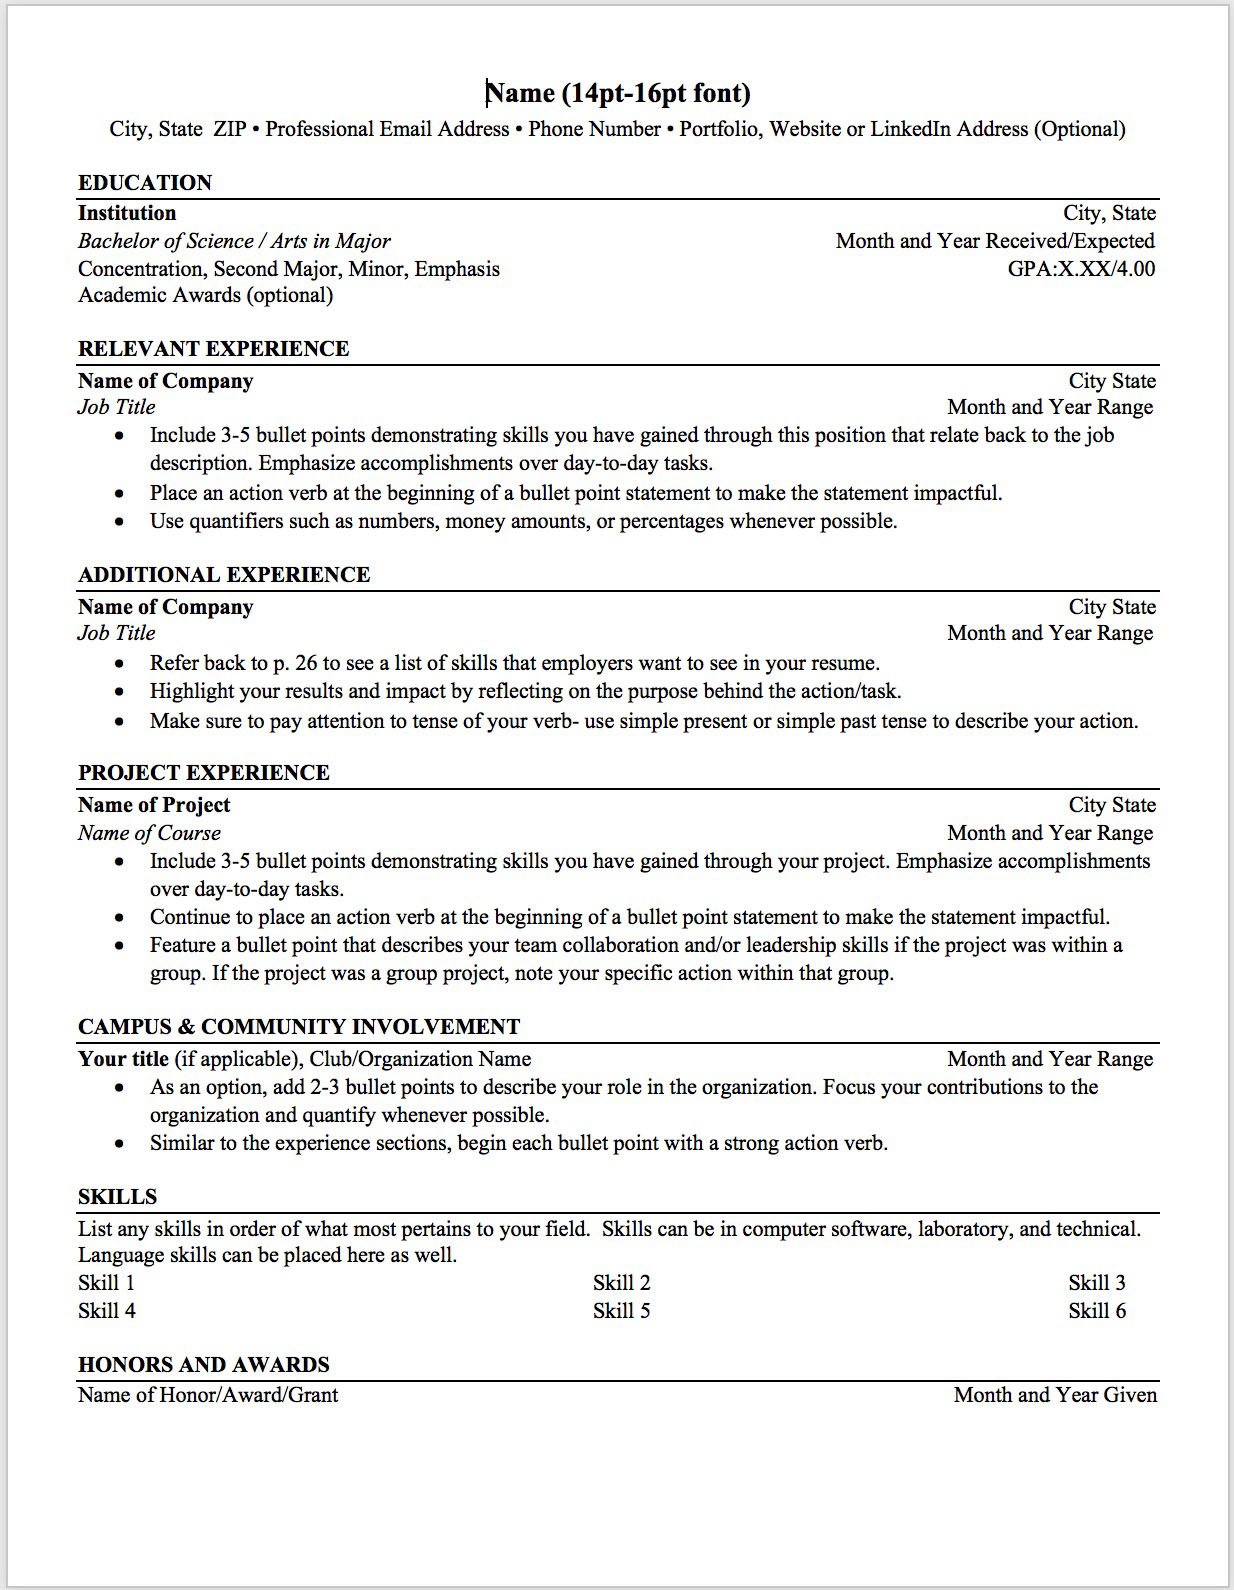 Basic resume template